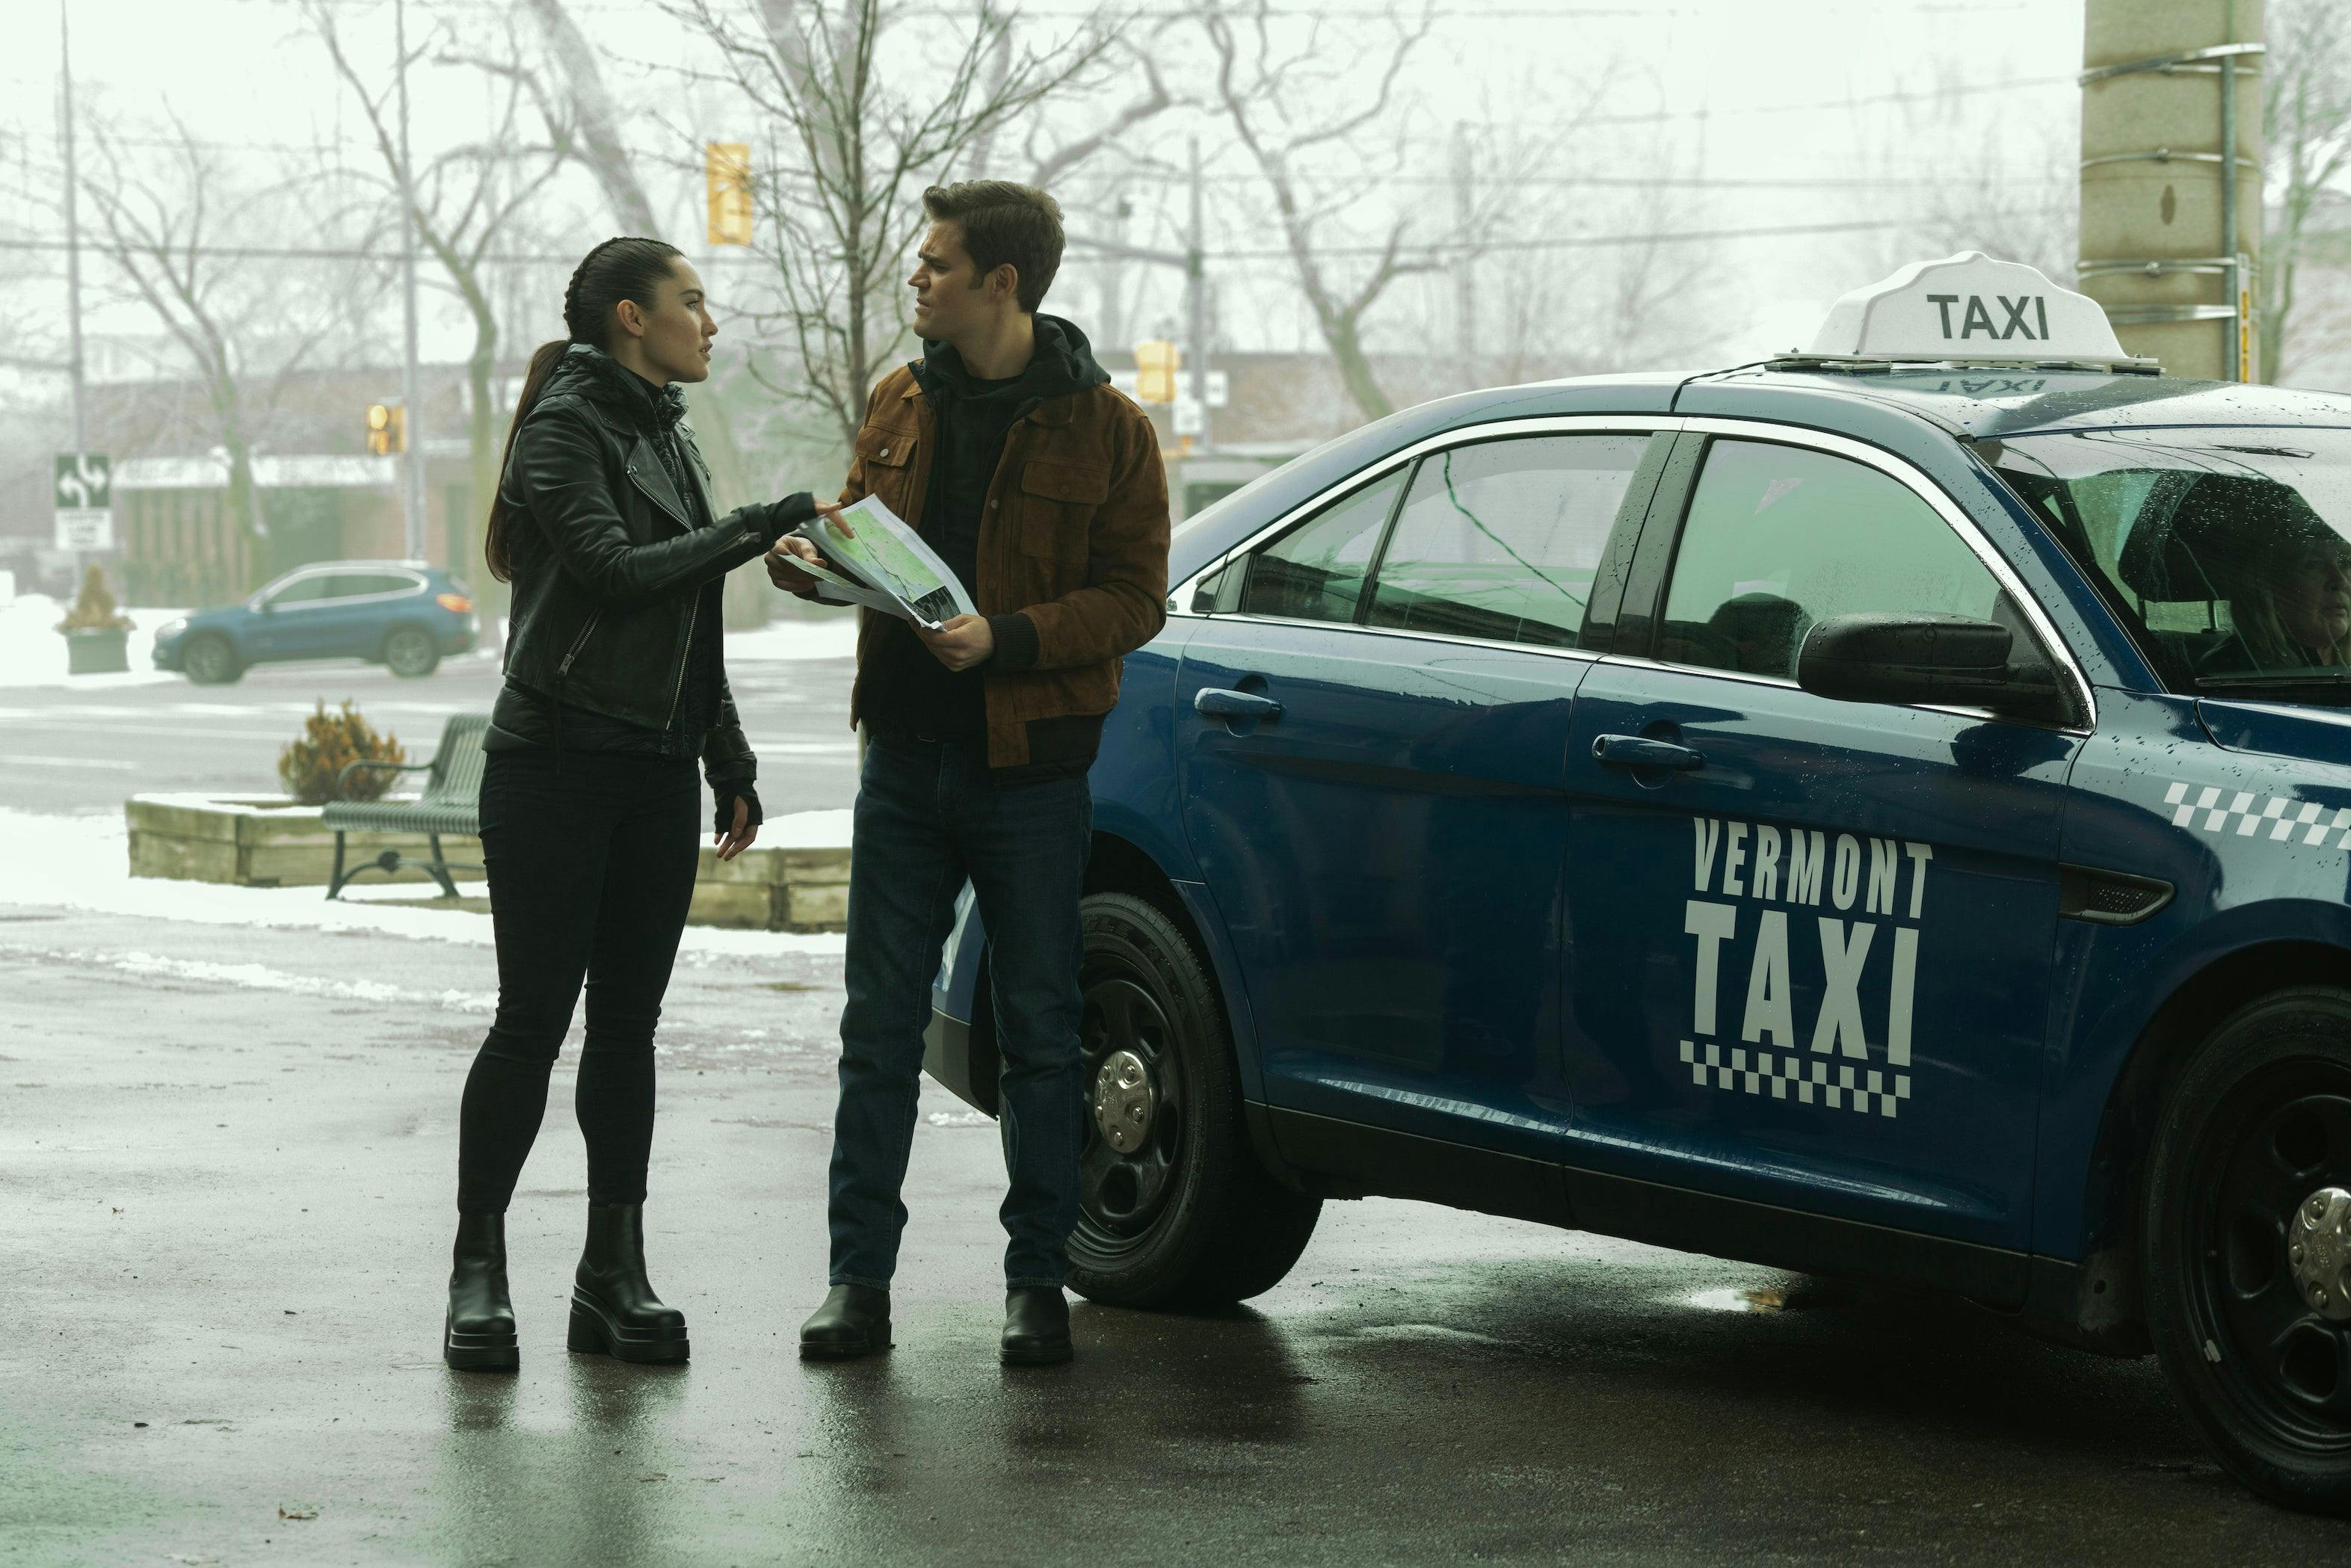 James Kirk and La'An in civilian attire next to a taxi cab in 'Tomorrow and Tomorrow and Tomorrow'